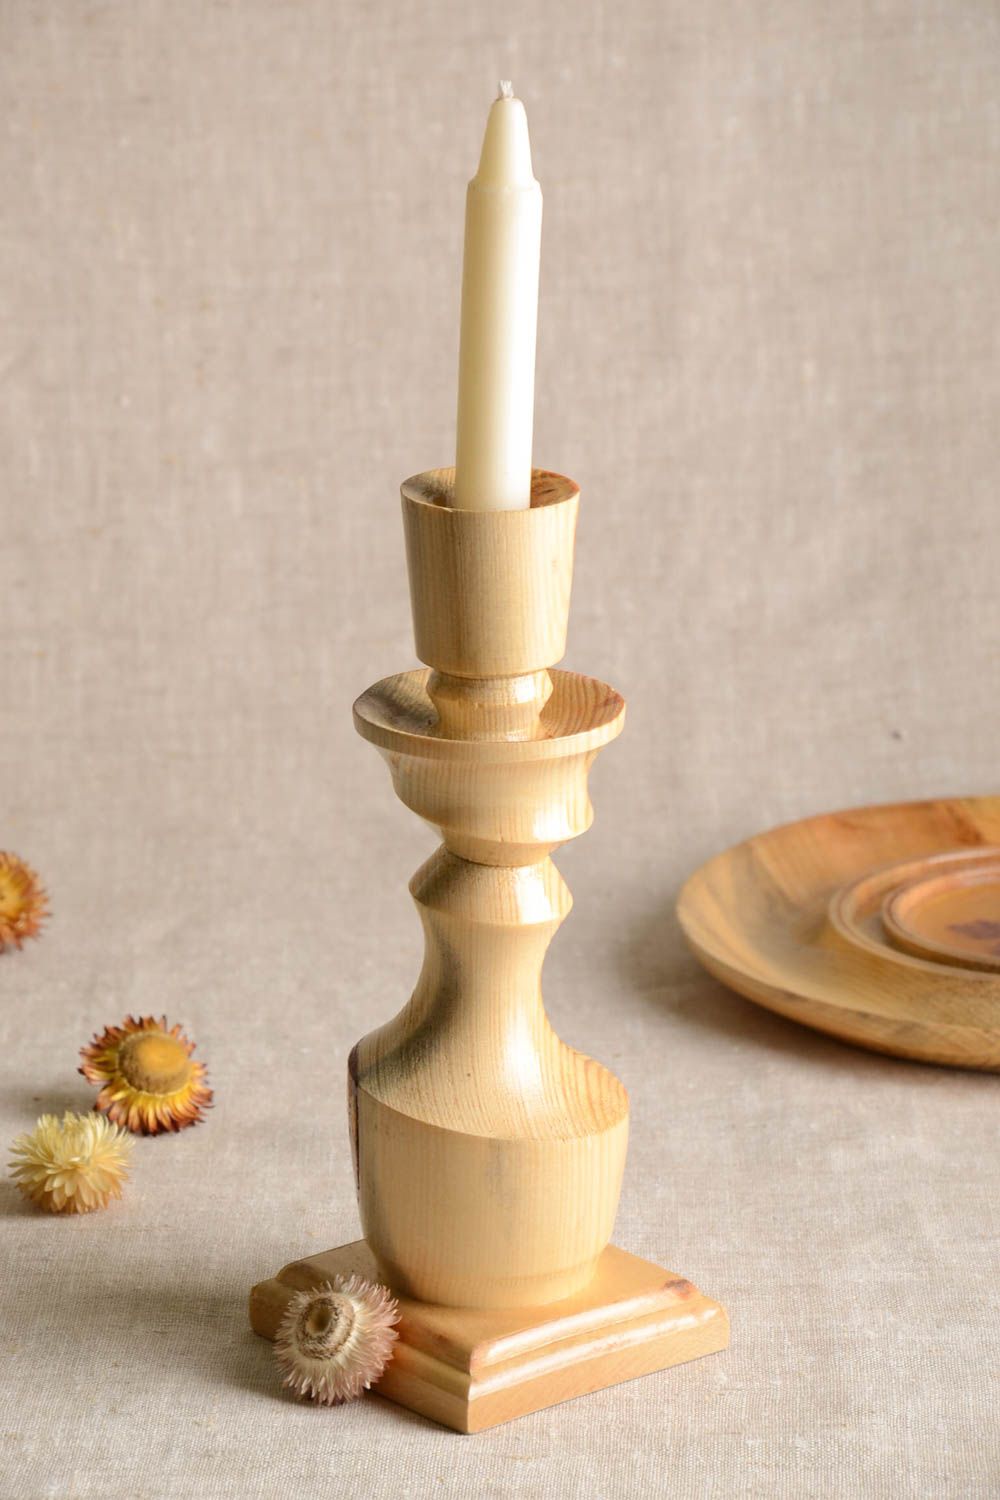 Handmade candlestick designer candle holder wooden candlestick decor ideas photo 1